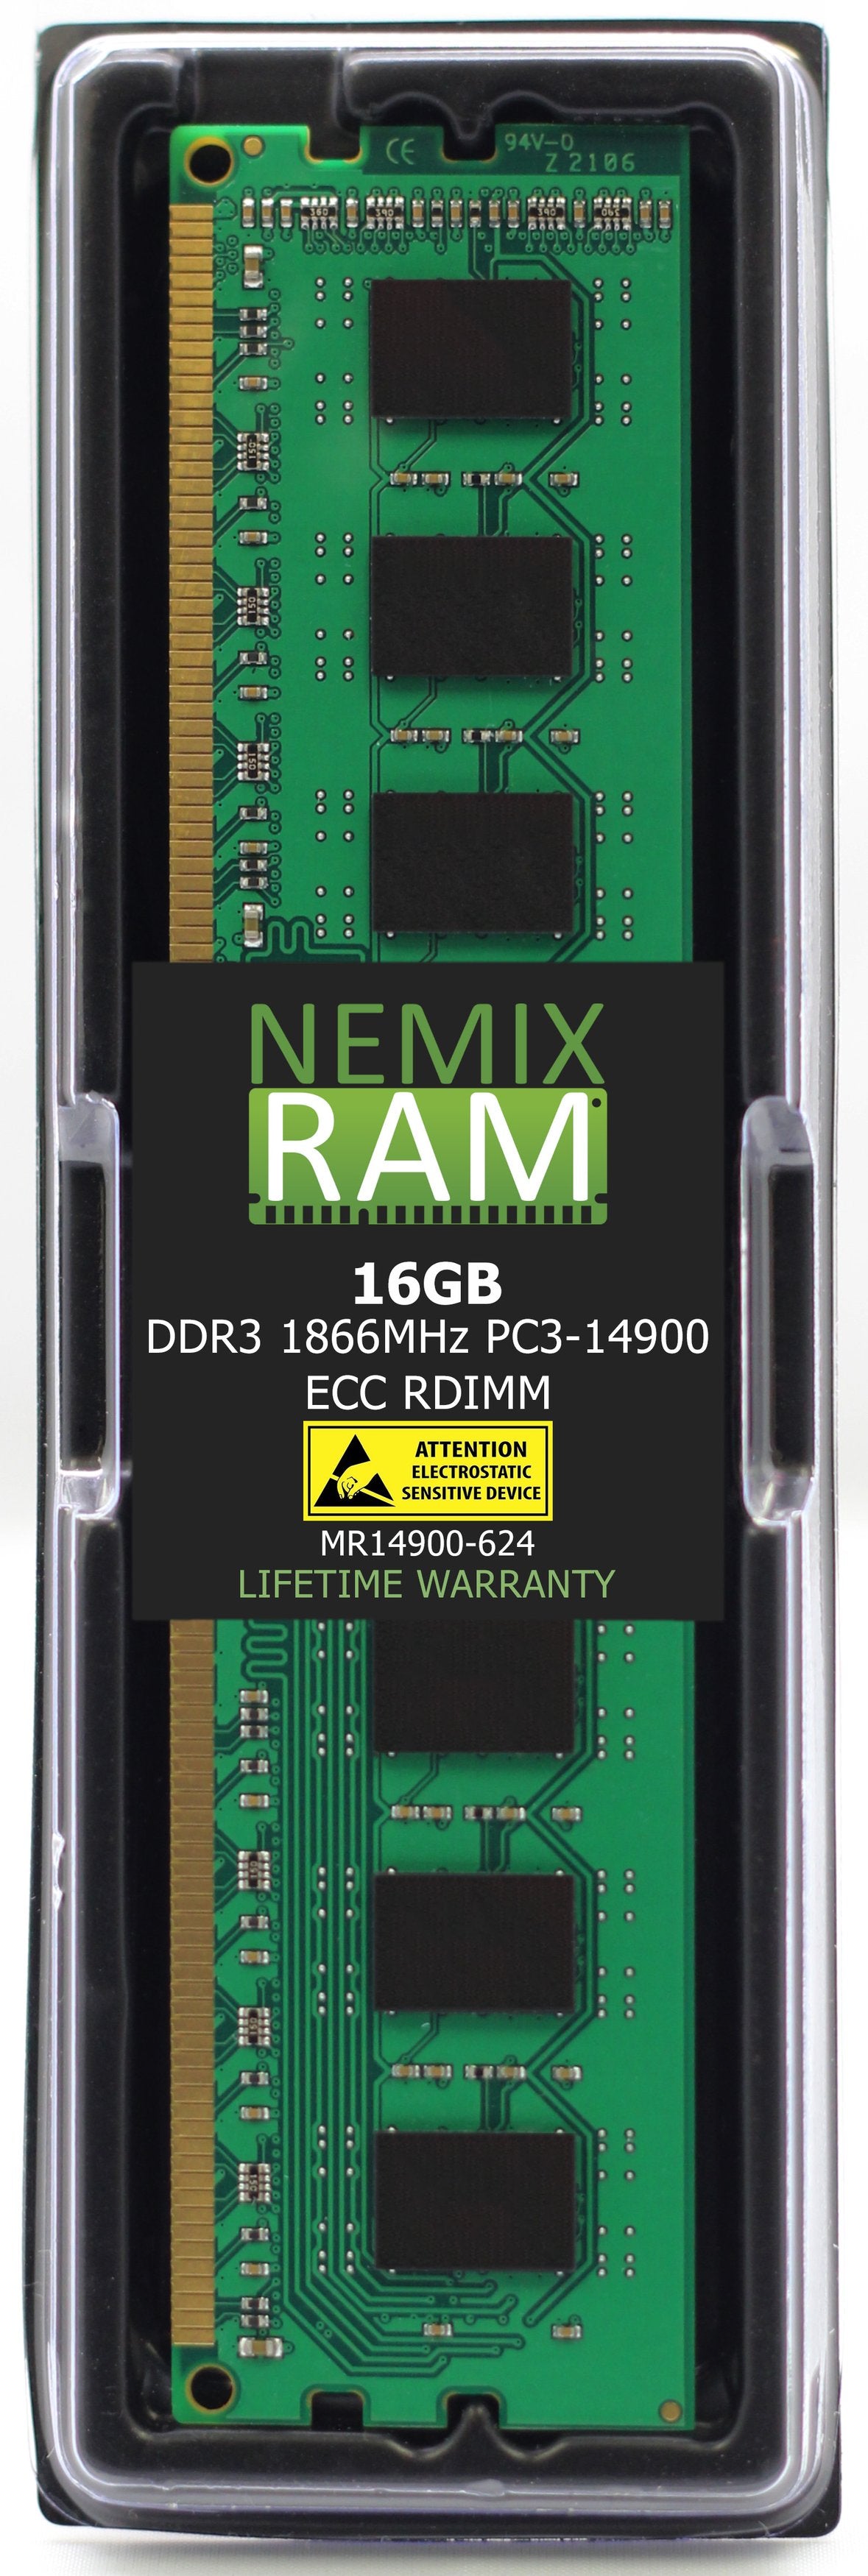 16GB DDR3 1866MHZ PC3-14900 RDIMM Compatible with SUPERMICRO MEM-DR316L-SL02-ER18